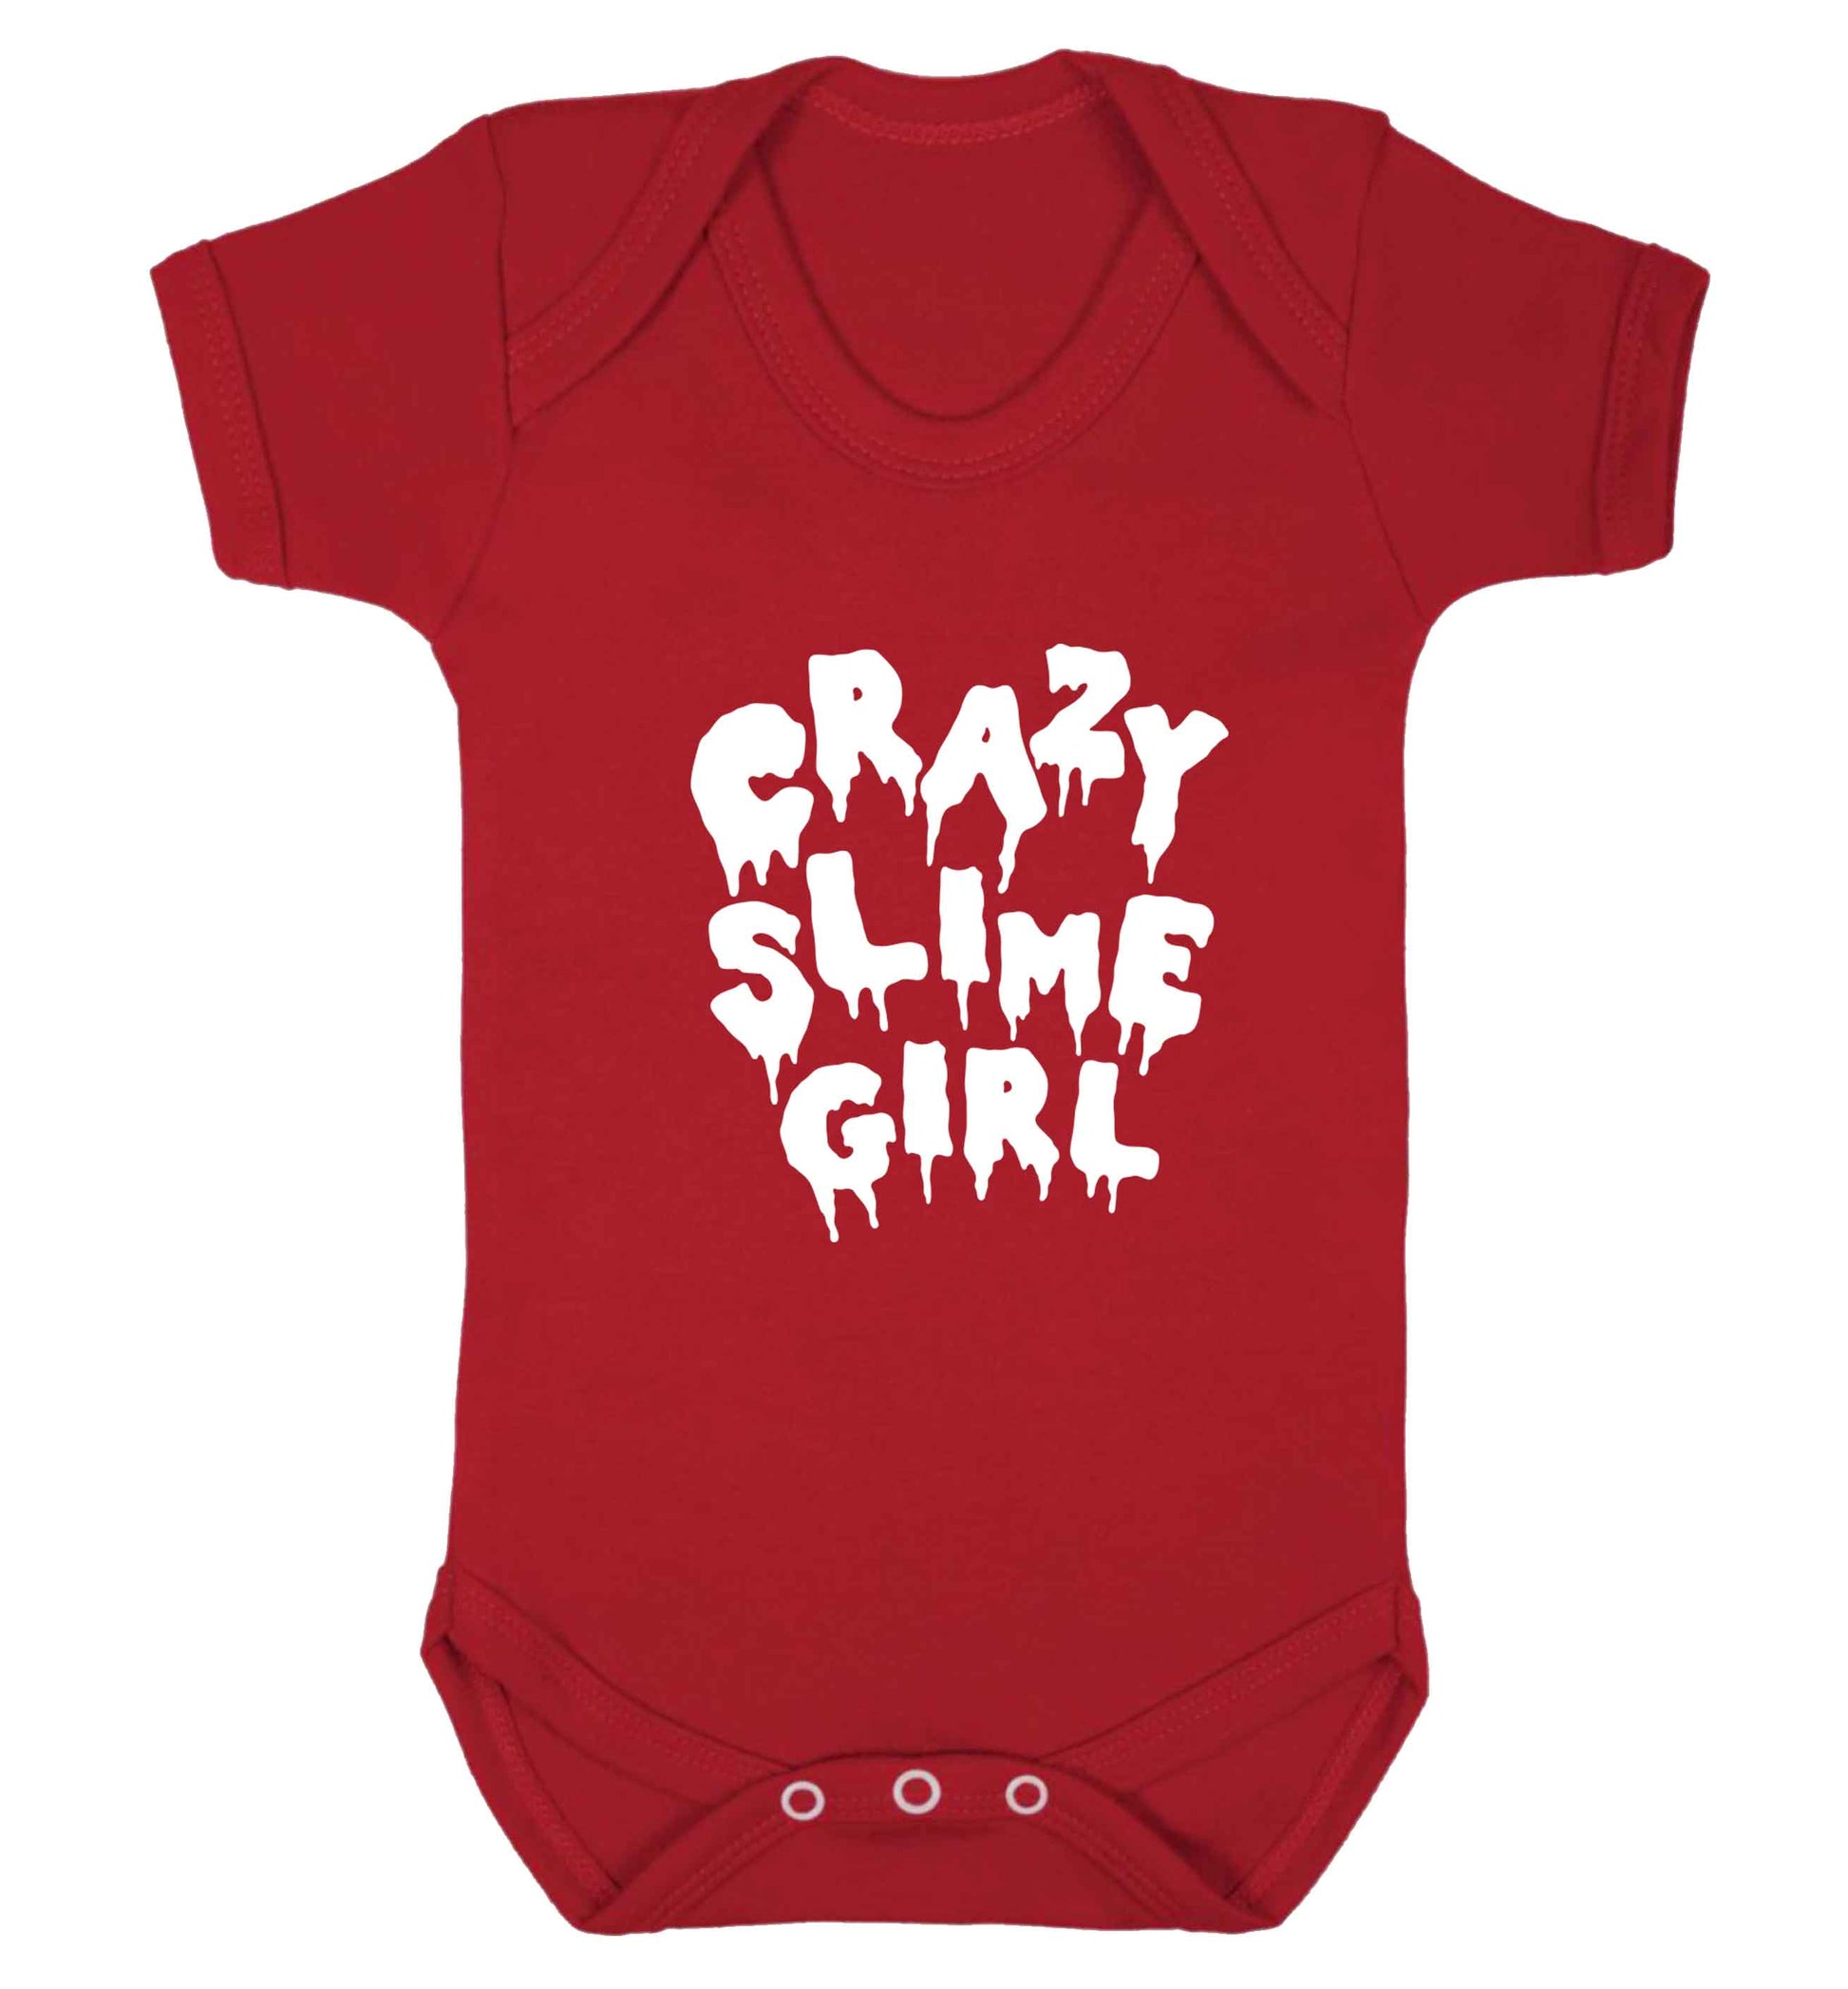 Crazy slime girl baby vest red 18-24 months